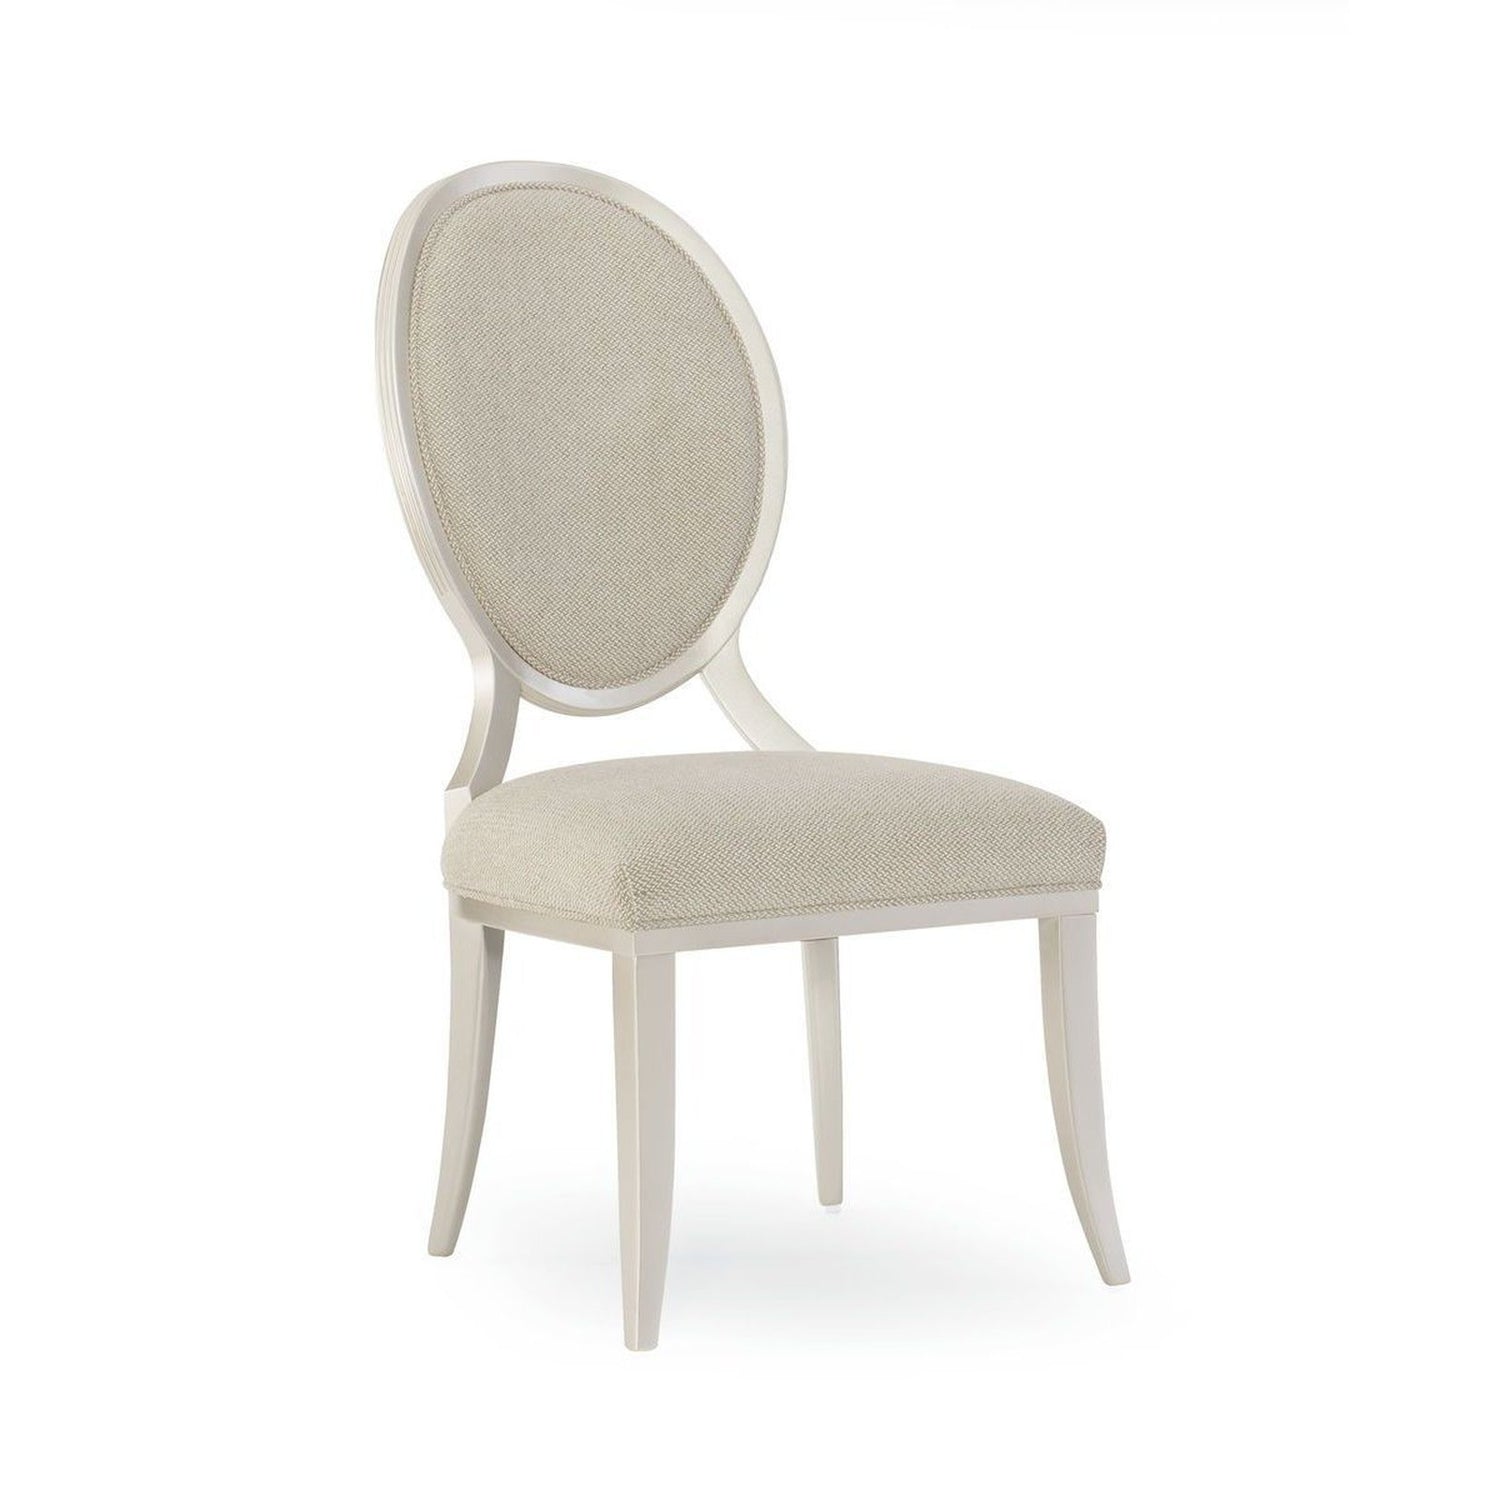 Strata Furniture Chair Accessory & Reviews